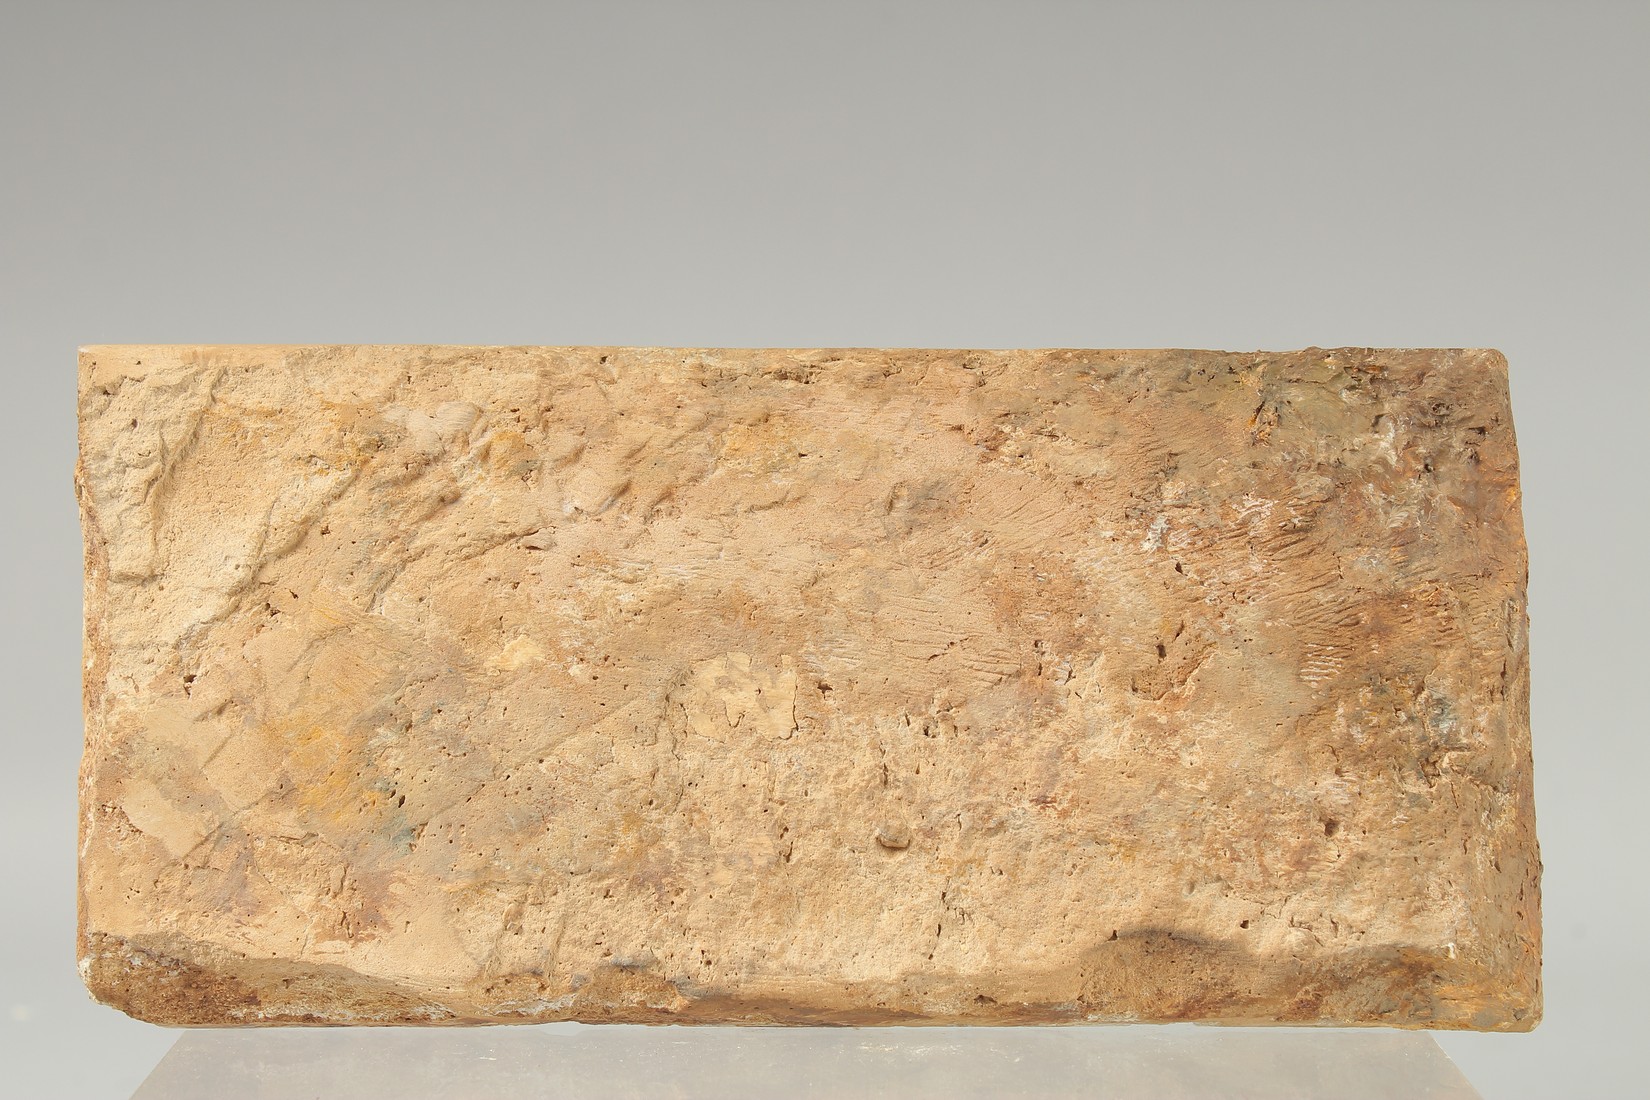 A FINE 17TH CENTURY PERSIAN SAFAVID GLAZED POTTERY TILE, 23cm x 11cm. - Image 2 of 2